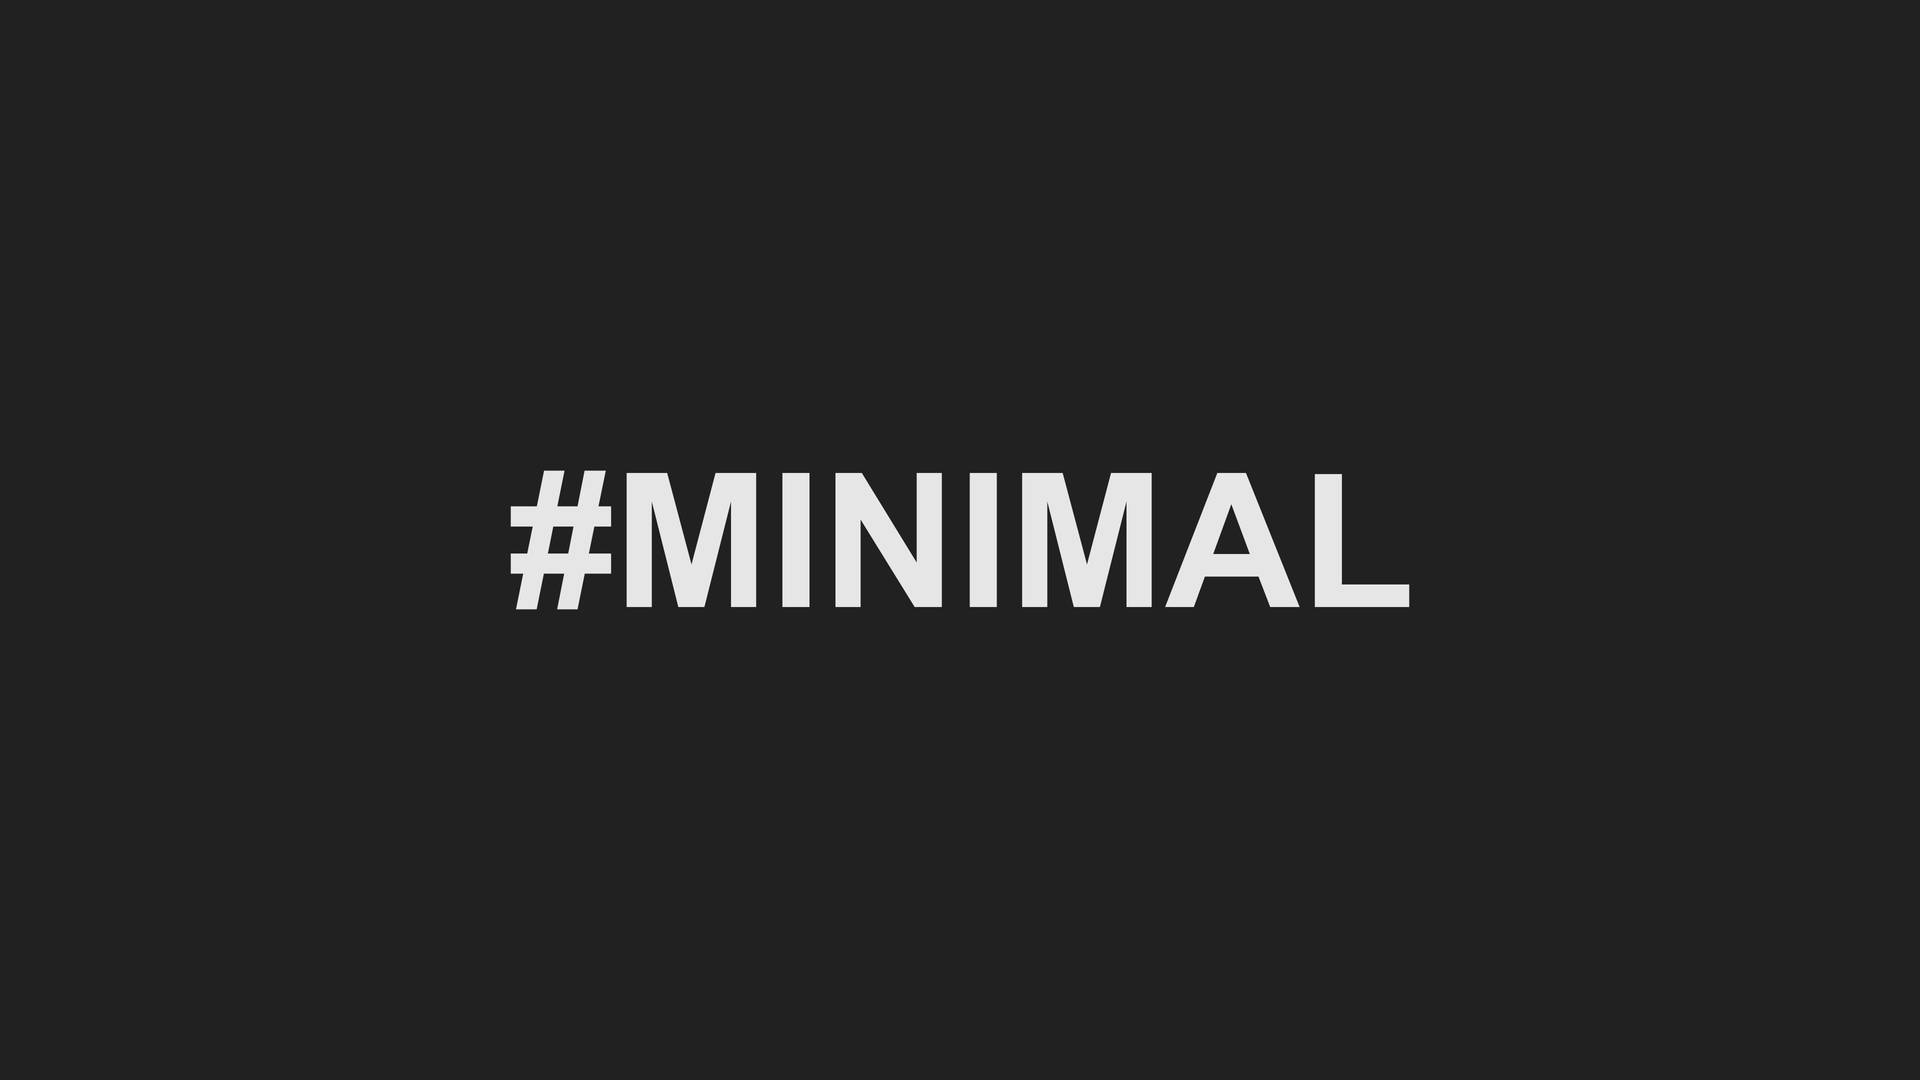 Hashtag Minimal Typography